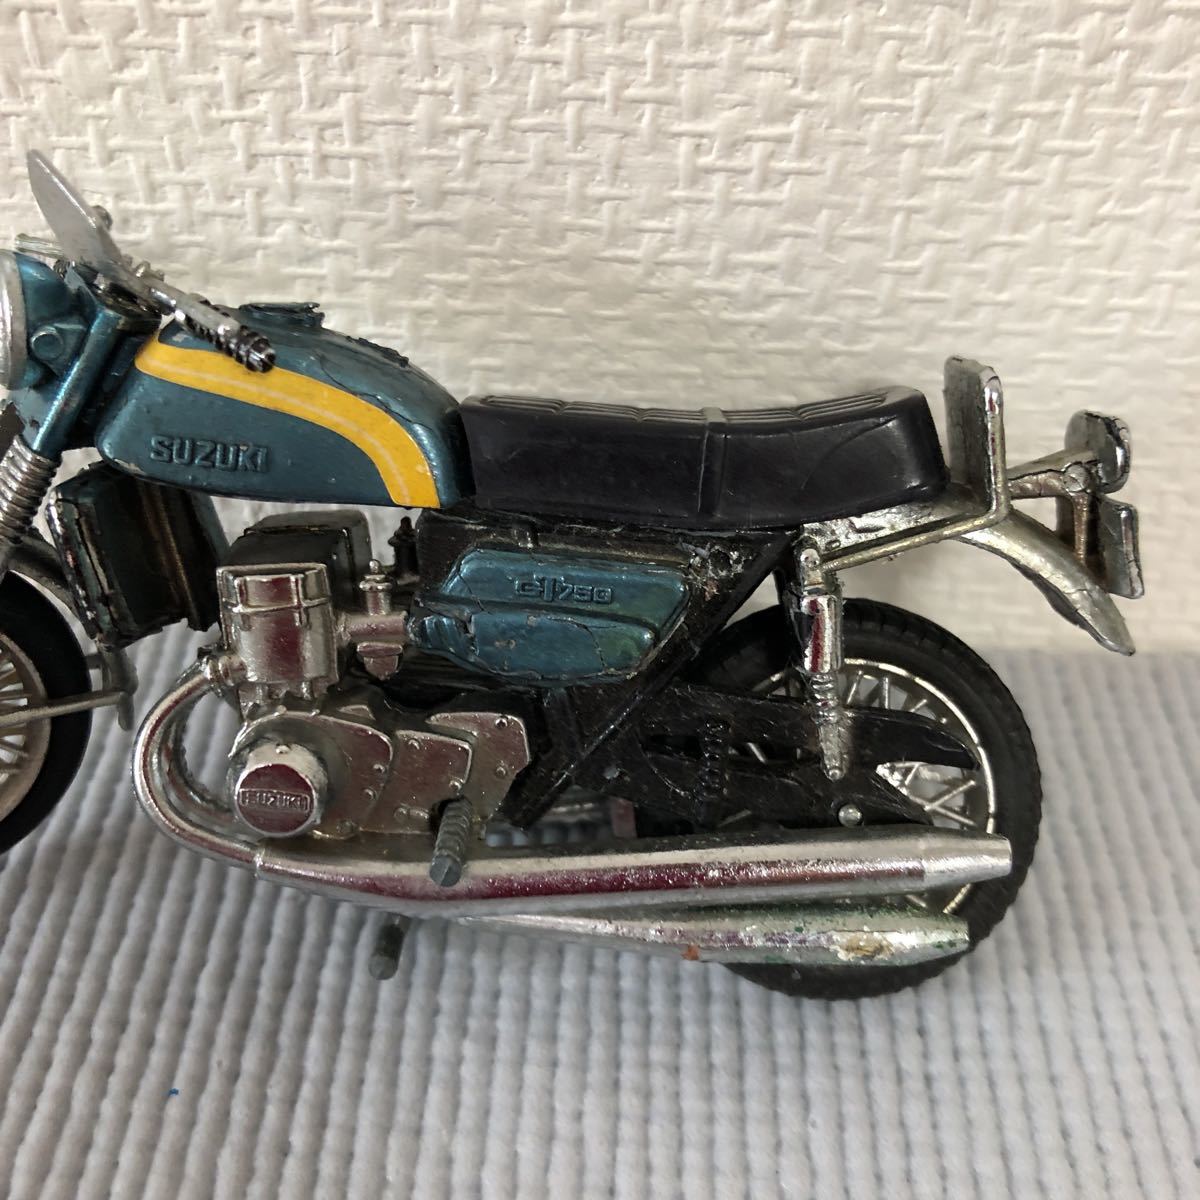  Suzuki GT750 мотоцикл миниатюра retro сплав 